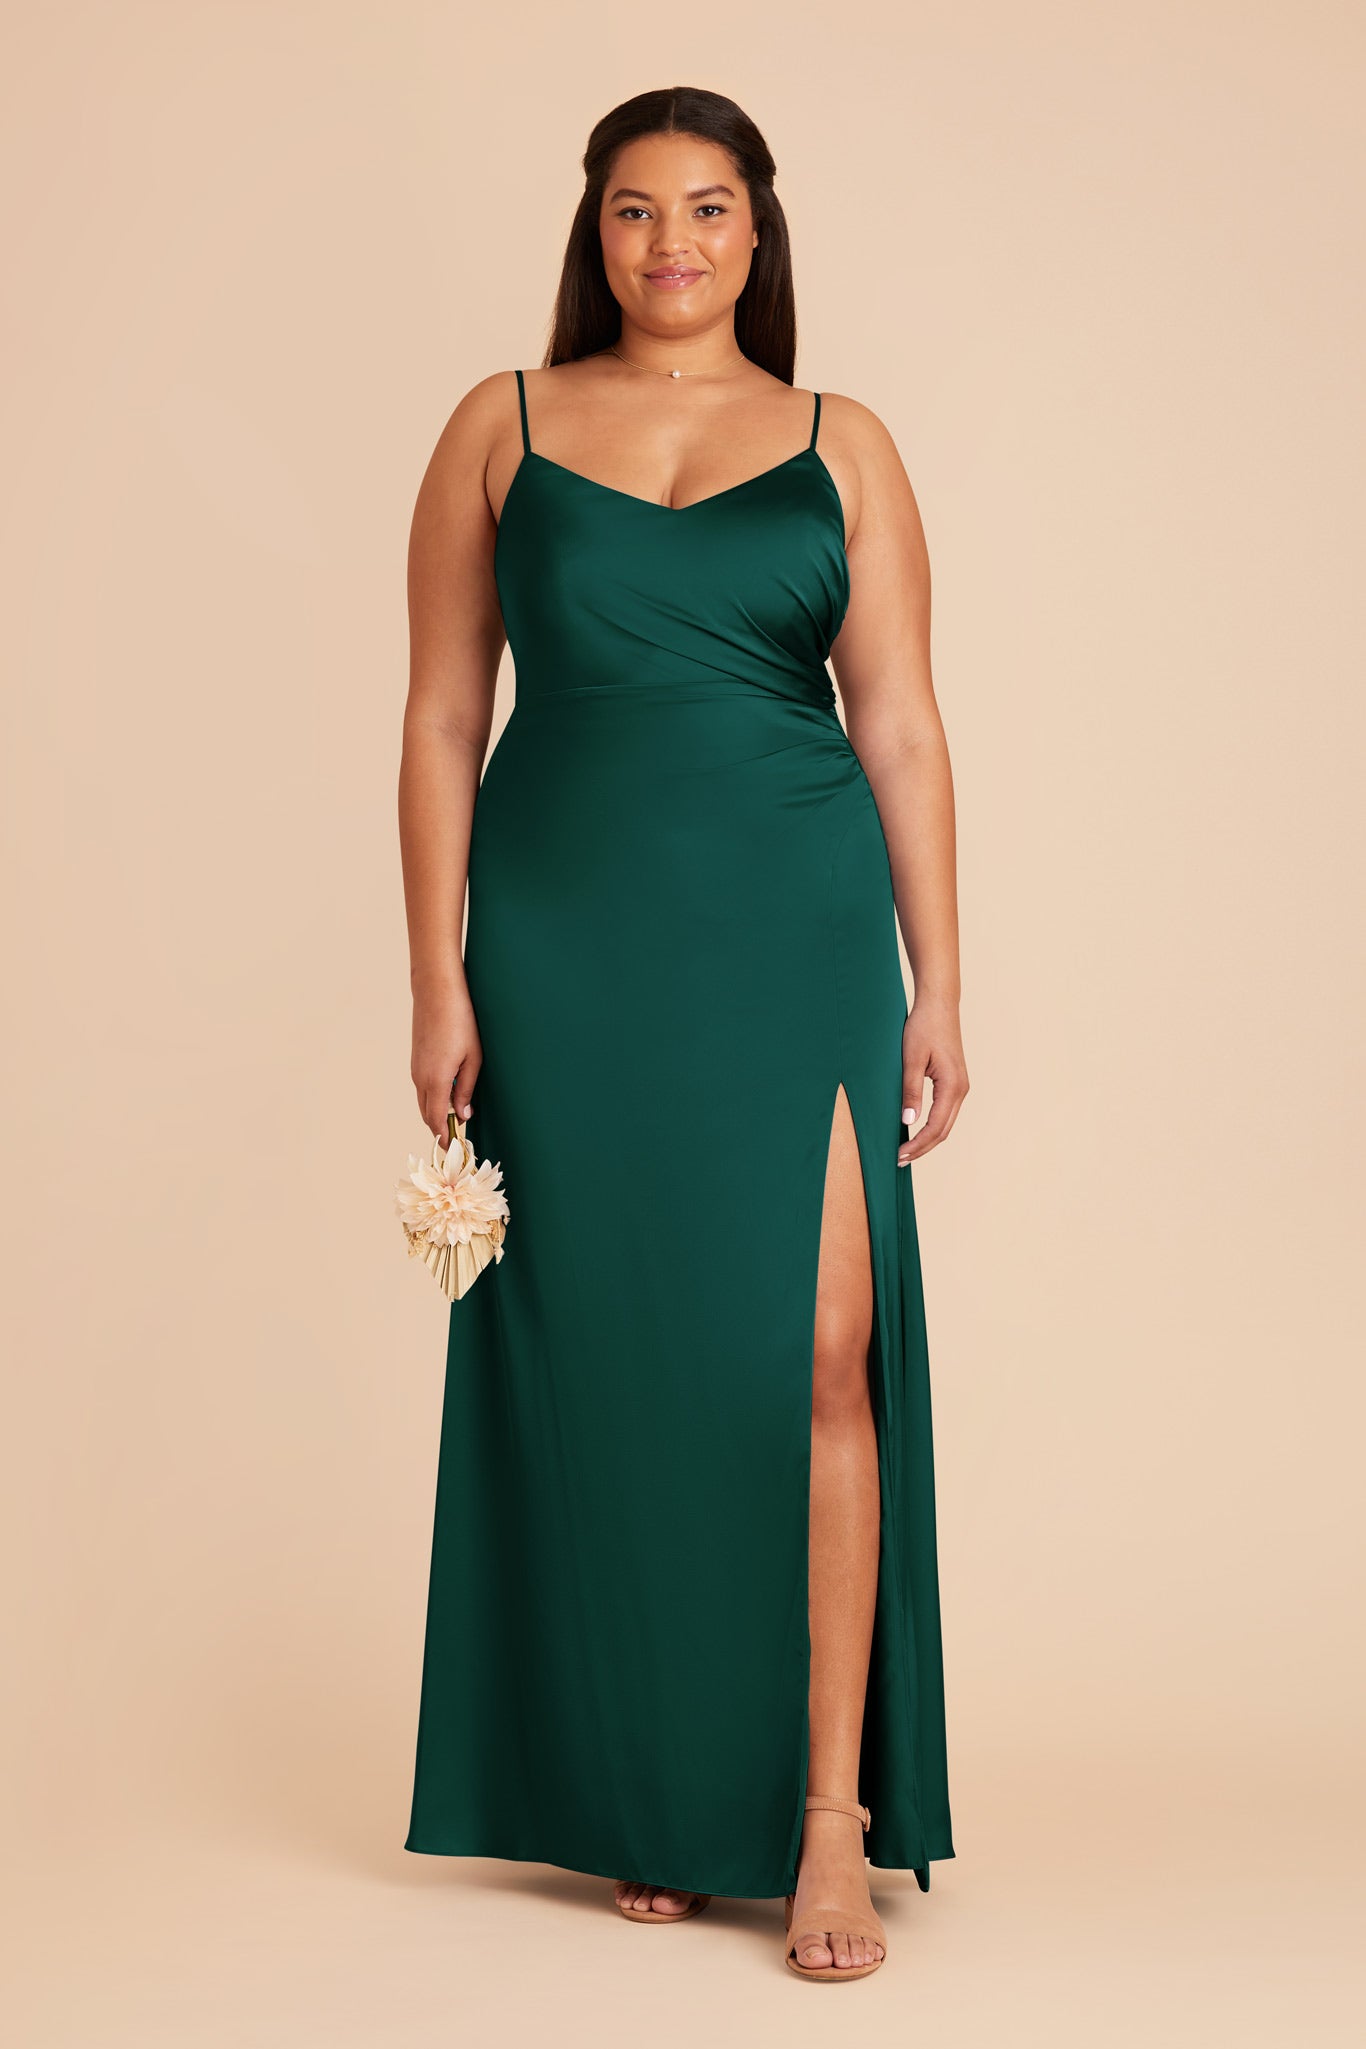 Emerald Catherine Matte Satin Dress by Birdy Grey